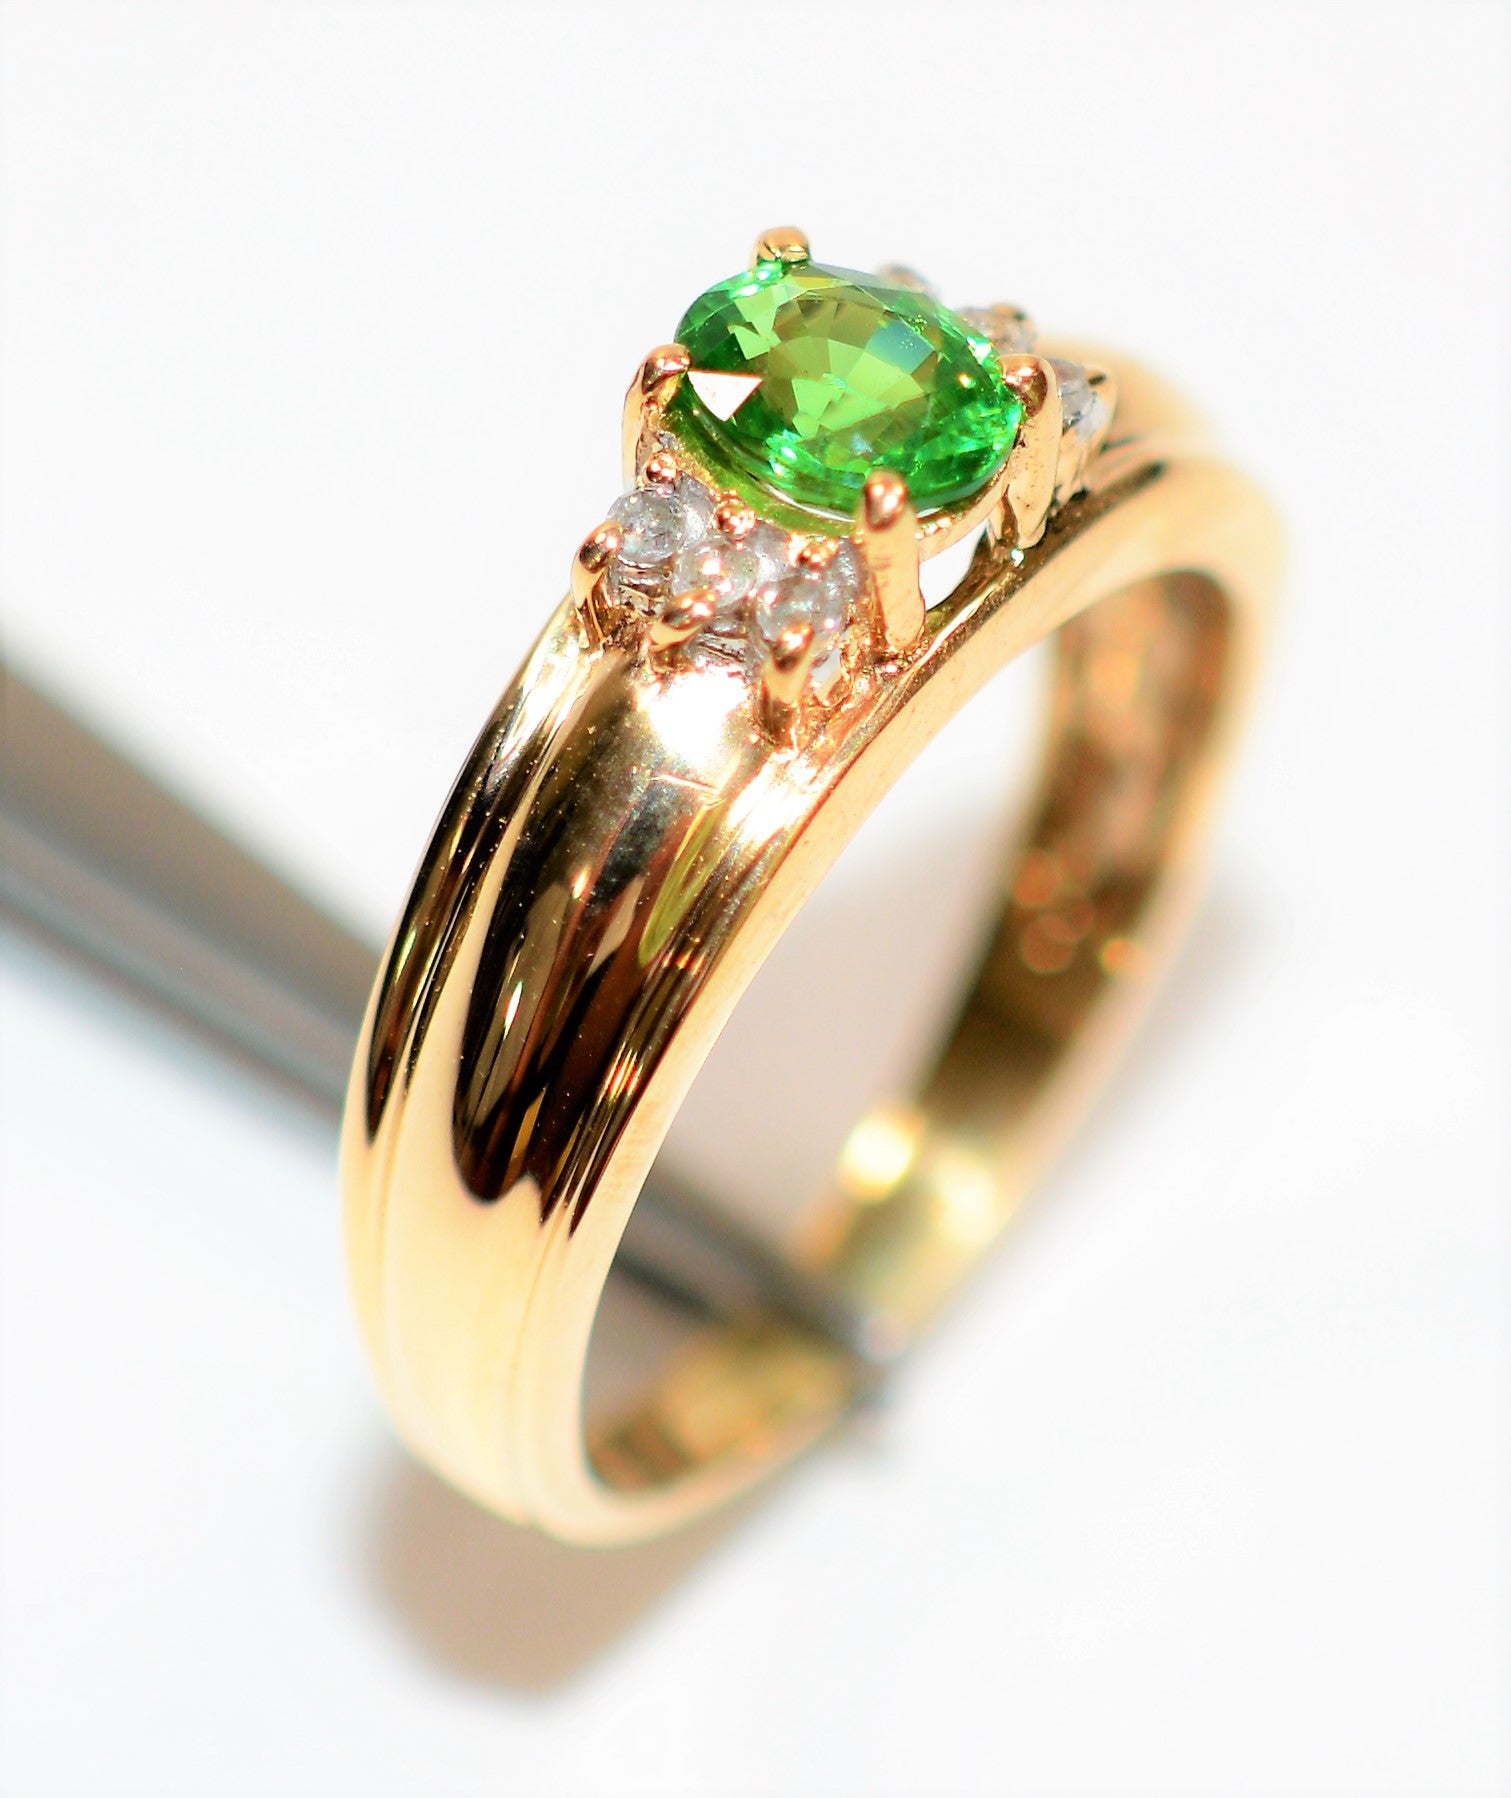 Natural Tsavorite Garnet & Diamond Ring 10K Solid Gold .52tcw Gemstone Ring Green Ring January Birthstone Ring Garnet Ring Fine Women's Ring